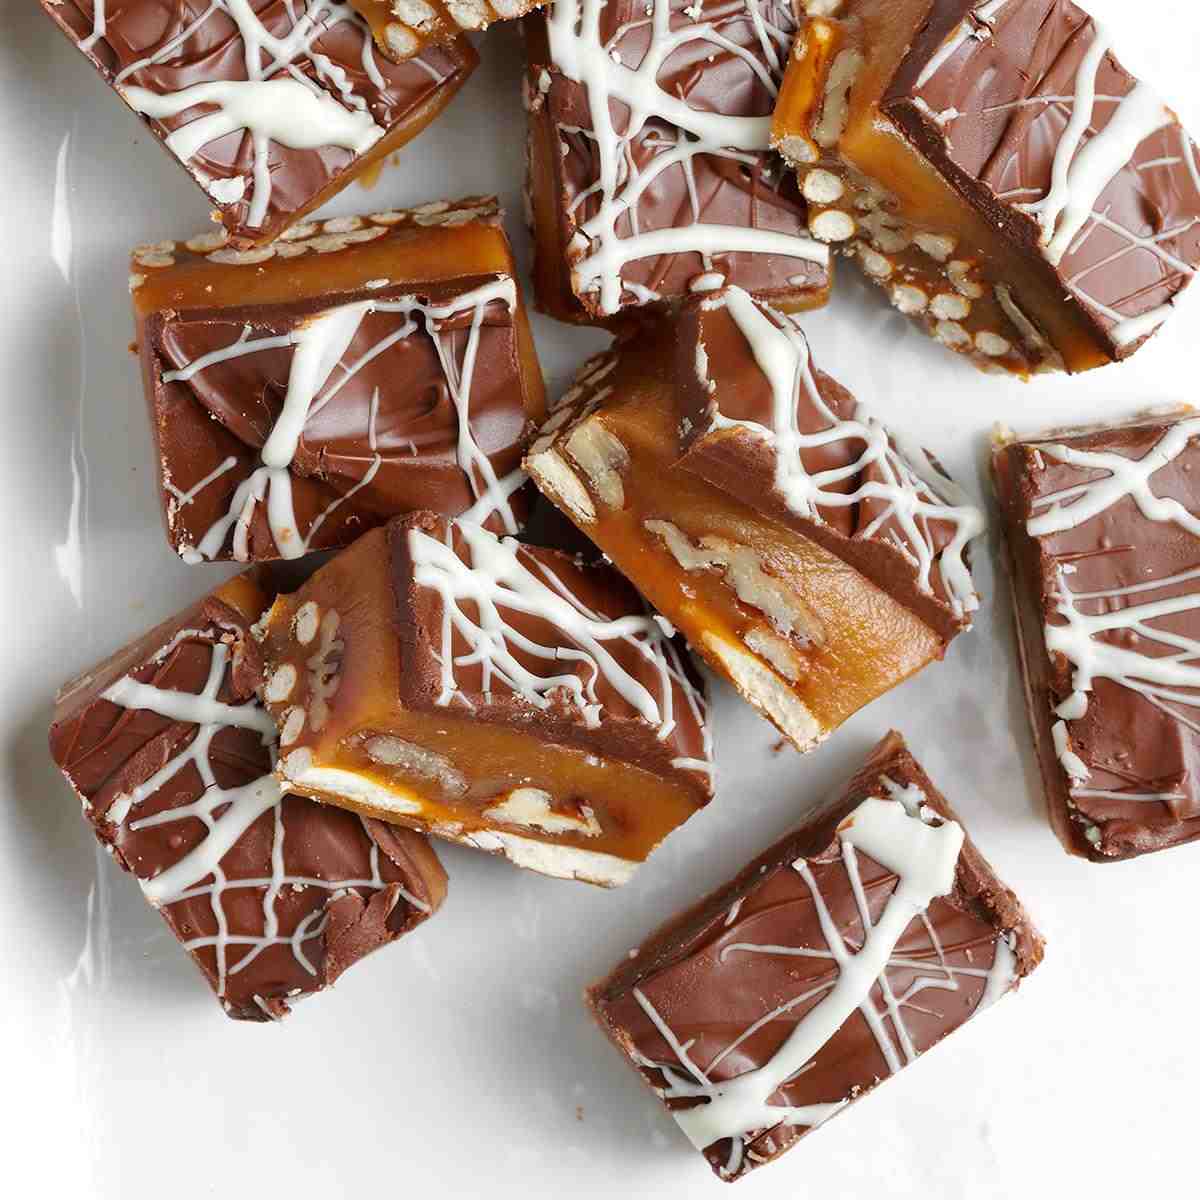 Almond slivers recept med choklad Chokladpraliner utan form